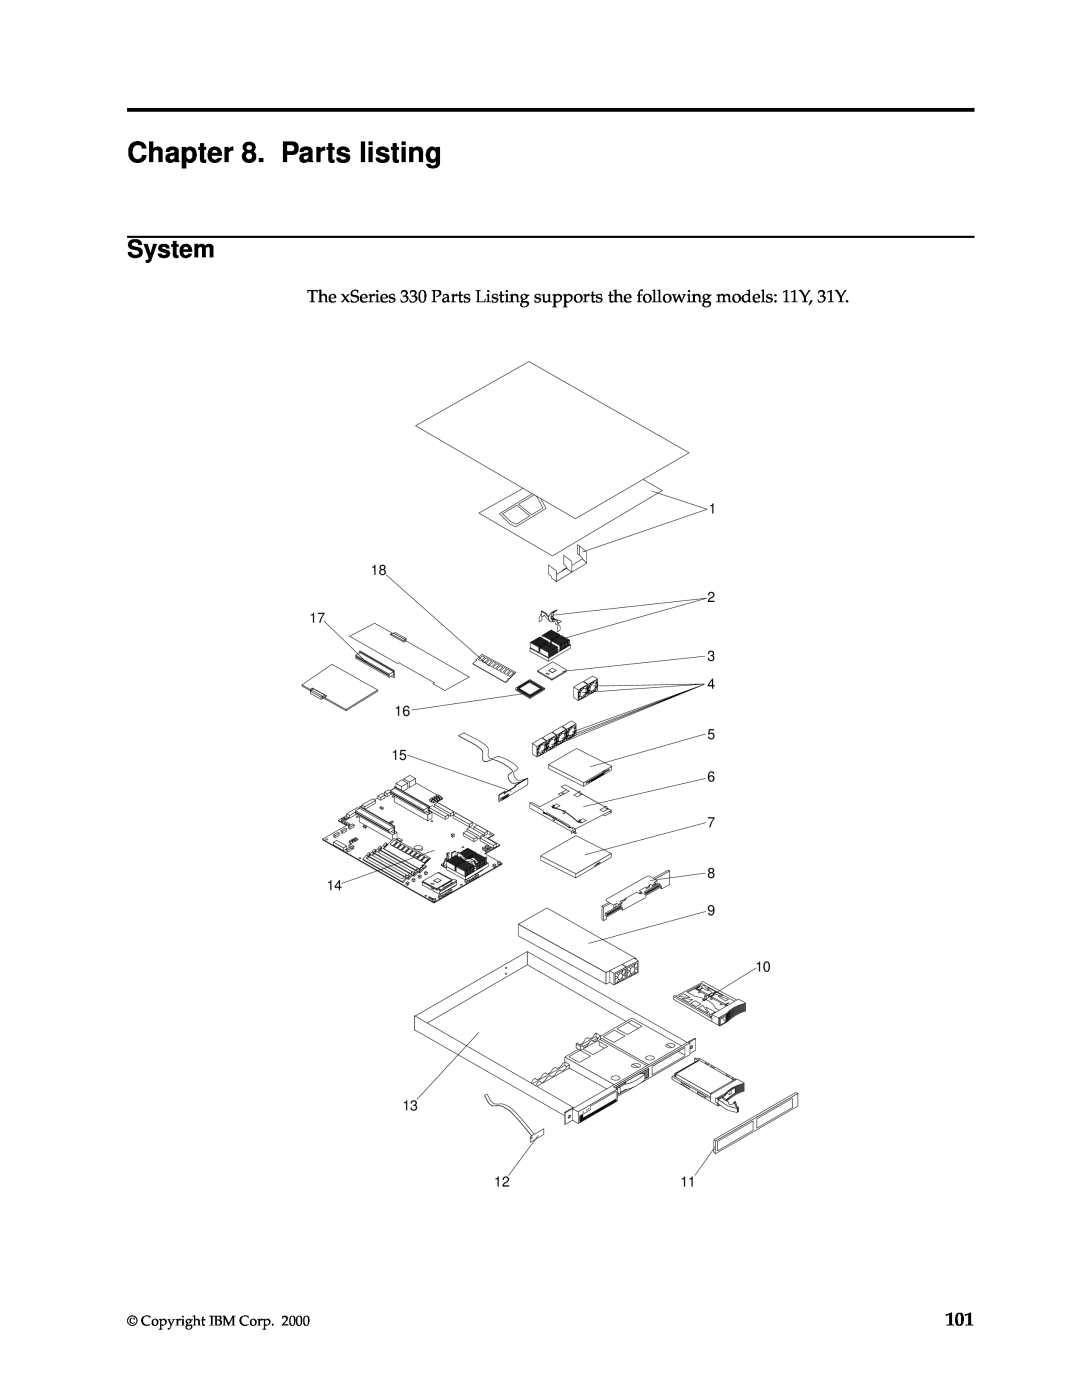 IBM xSeries 330 manual Parts listing, System, Copyright IBM Corp 